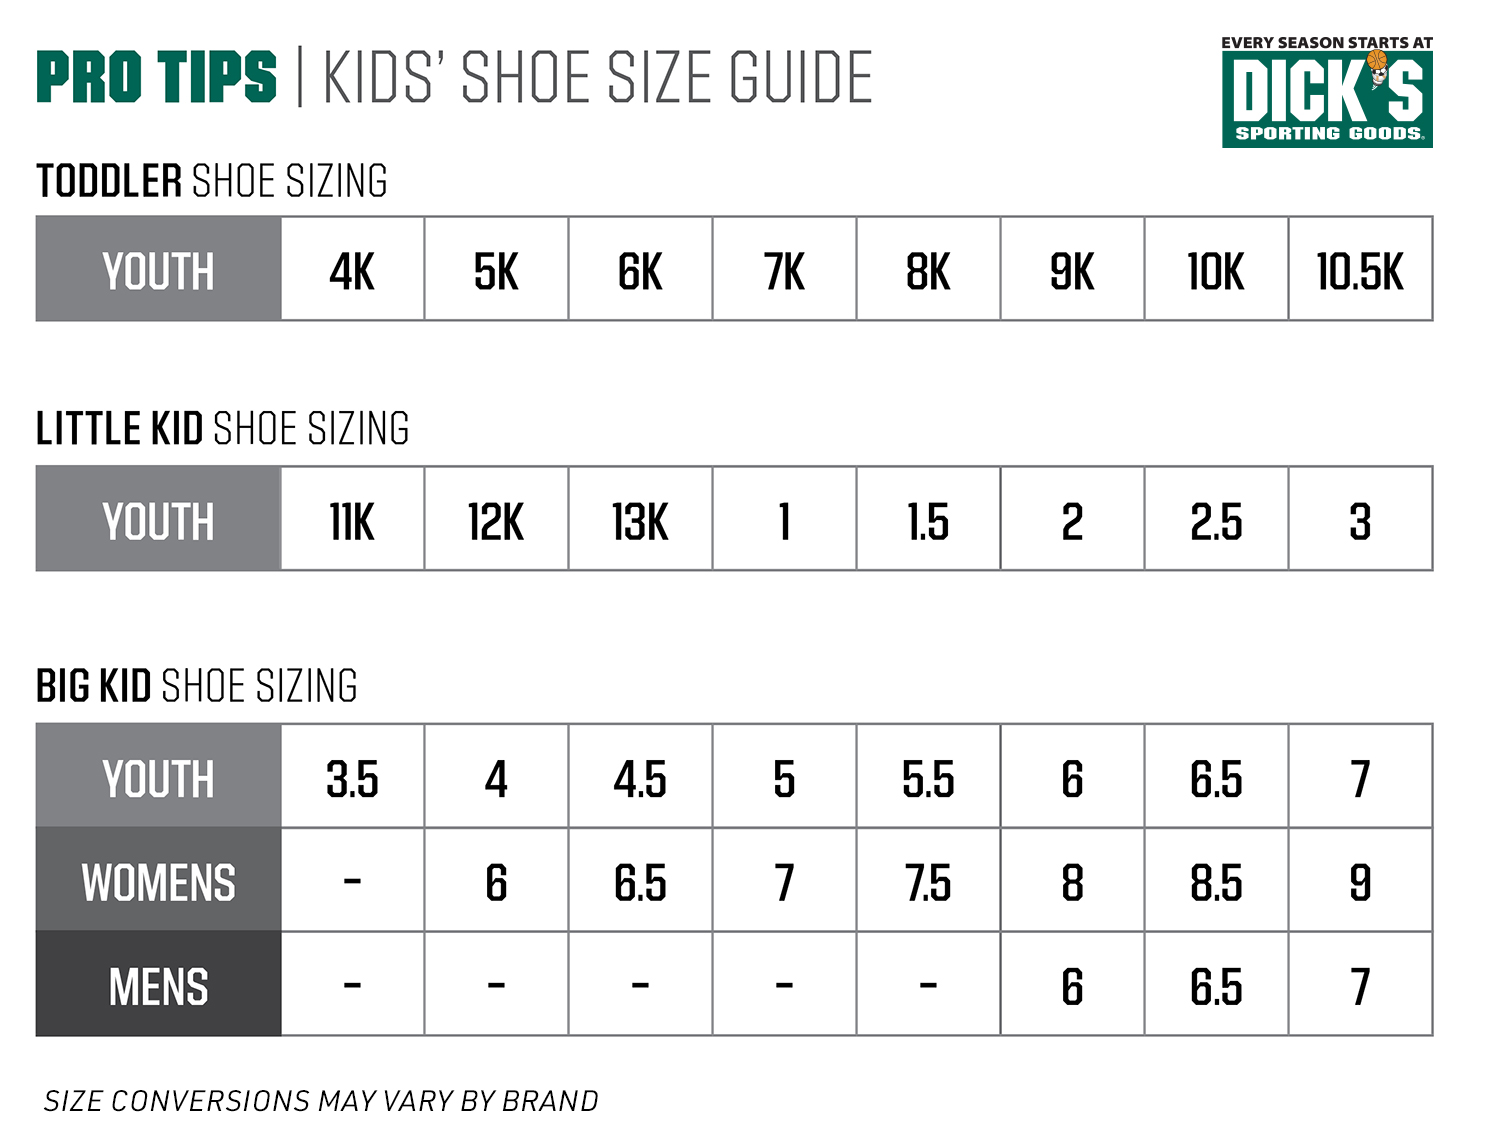 Adidas Conversion Shoe Size